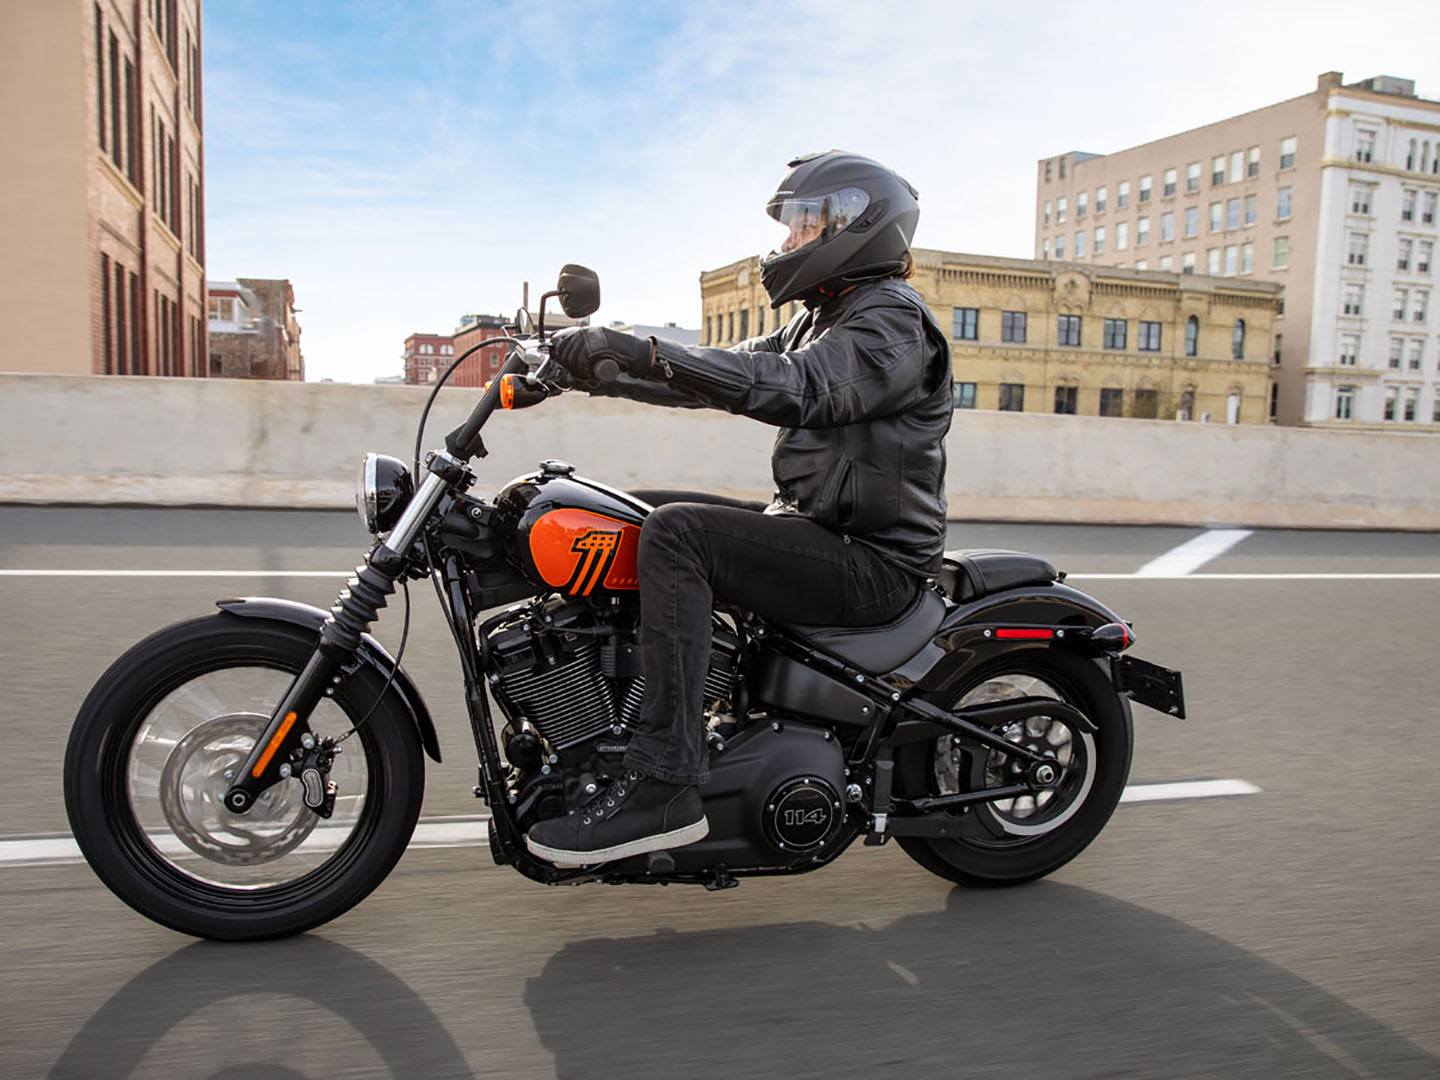 2021 Harley-Davidson Street Bob® 114 in Cortland, Ohio - Photo 9